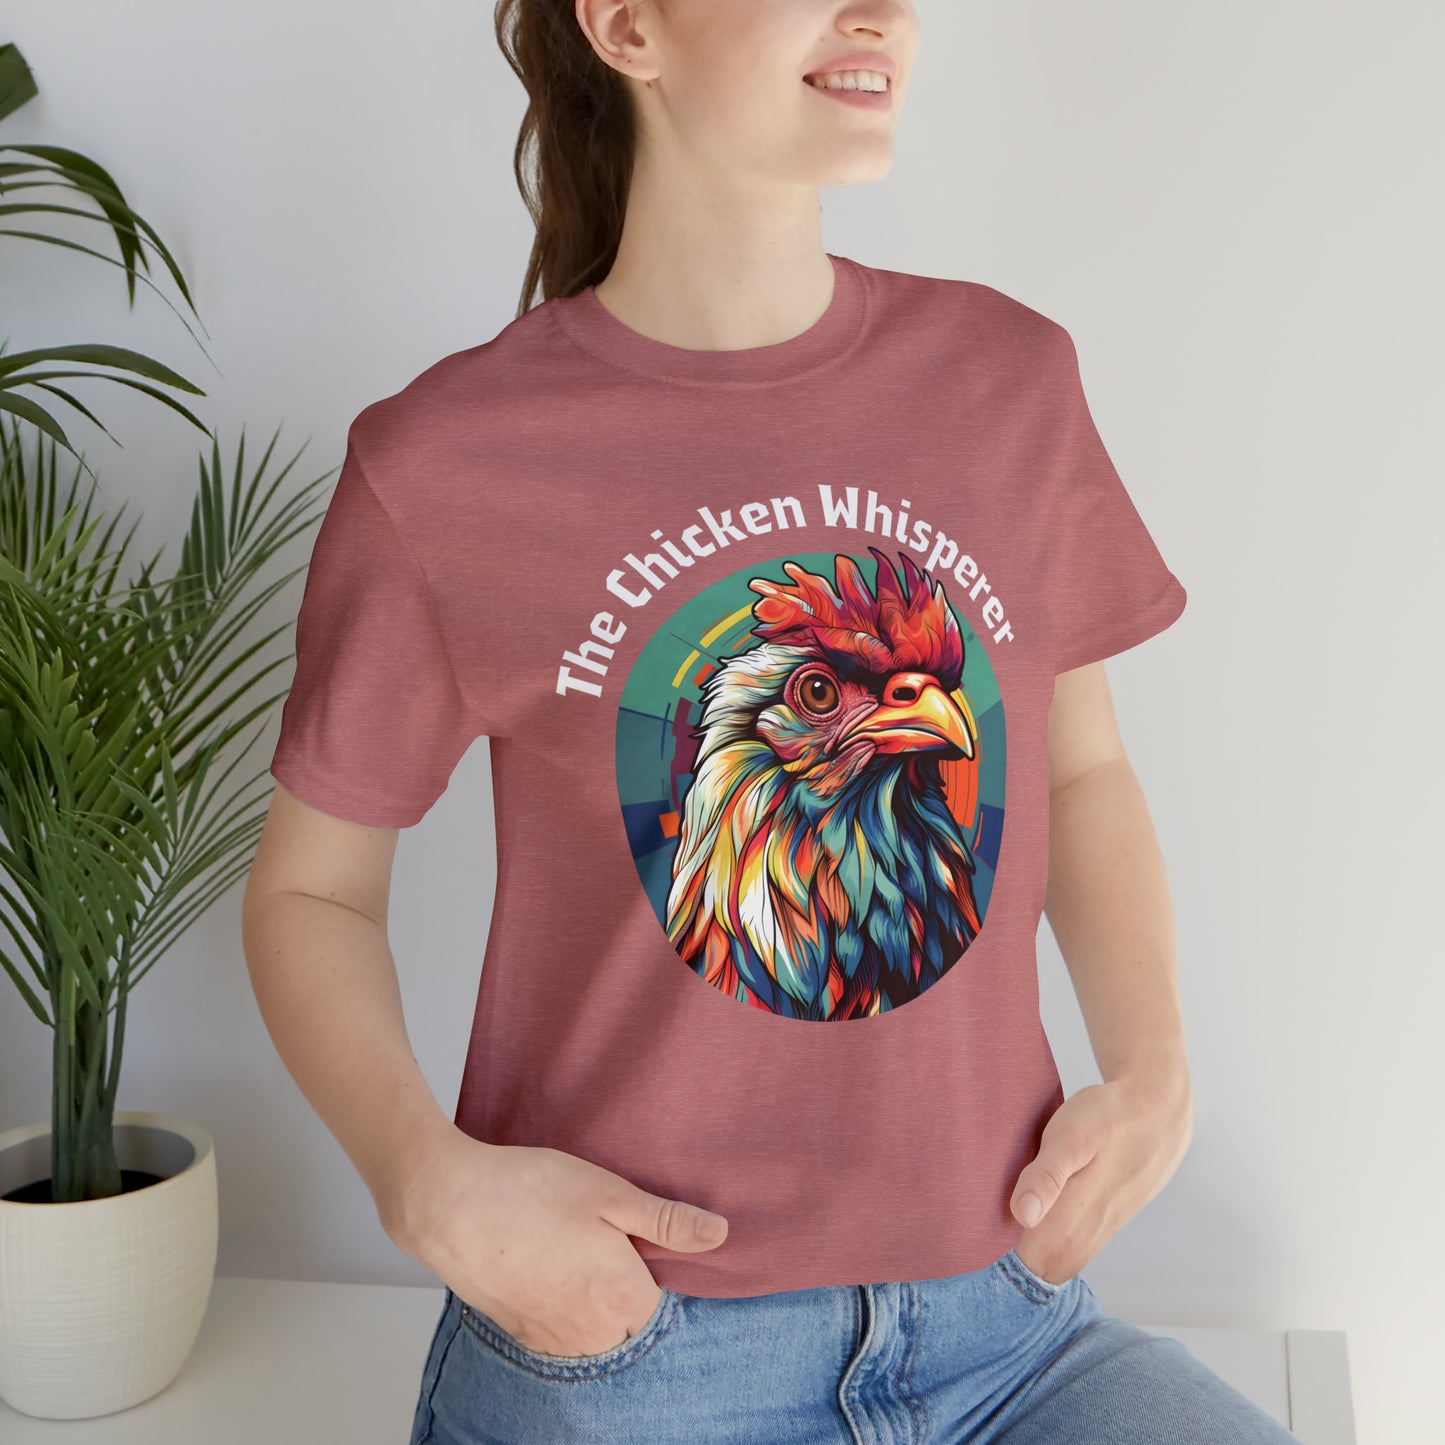 The Chicken Whisperer Shirt - Retro Vintage Chicken Lover Shirt Funny Chicken Shirt farming t-shirt Chicken Shirt Women's Chicken Shirt, Farm Tees Farm Shirt, Chicken Lover Shirt